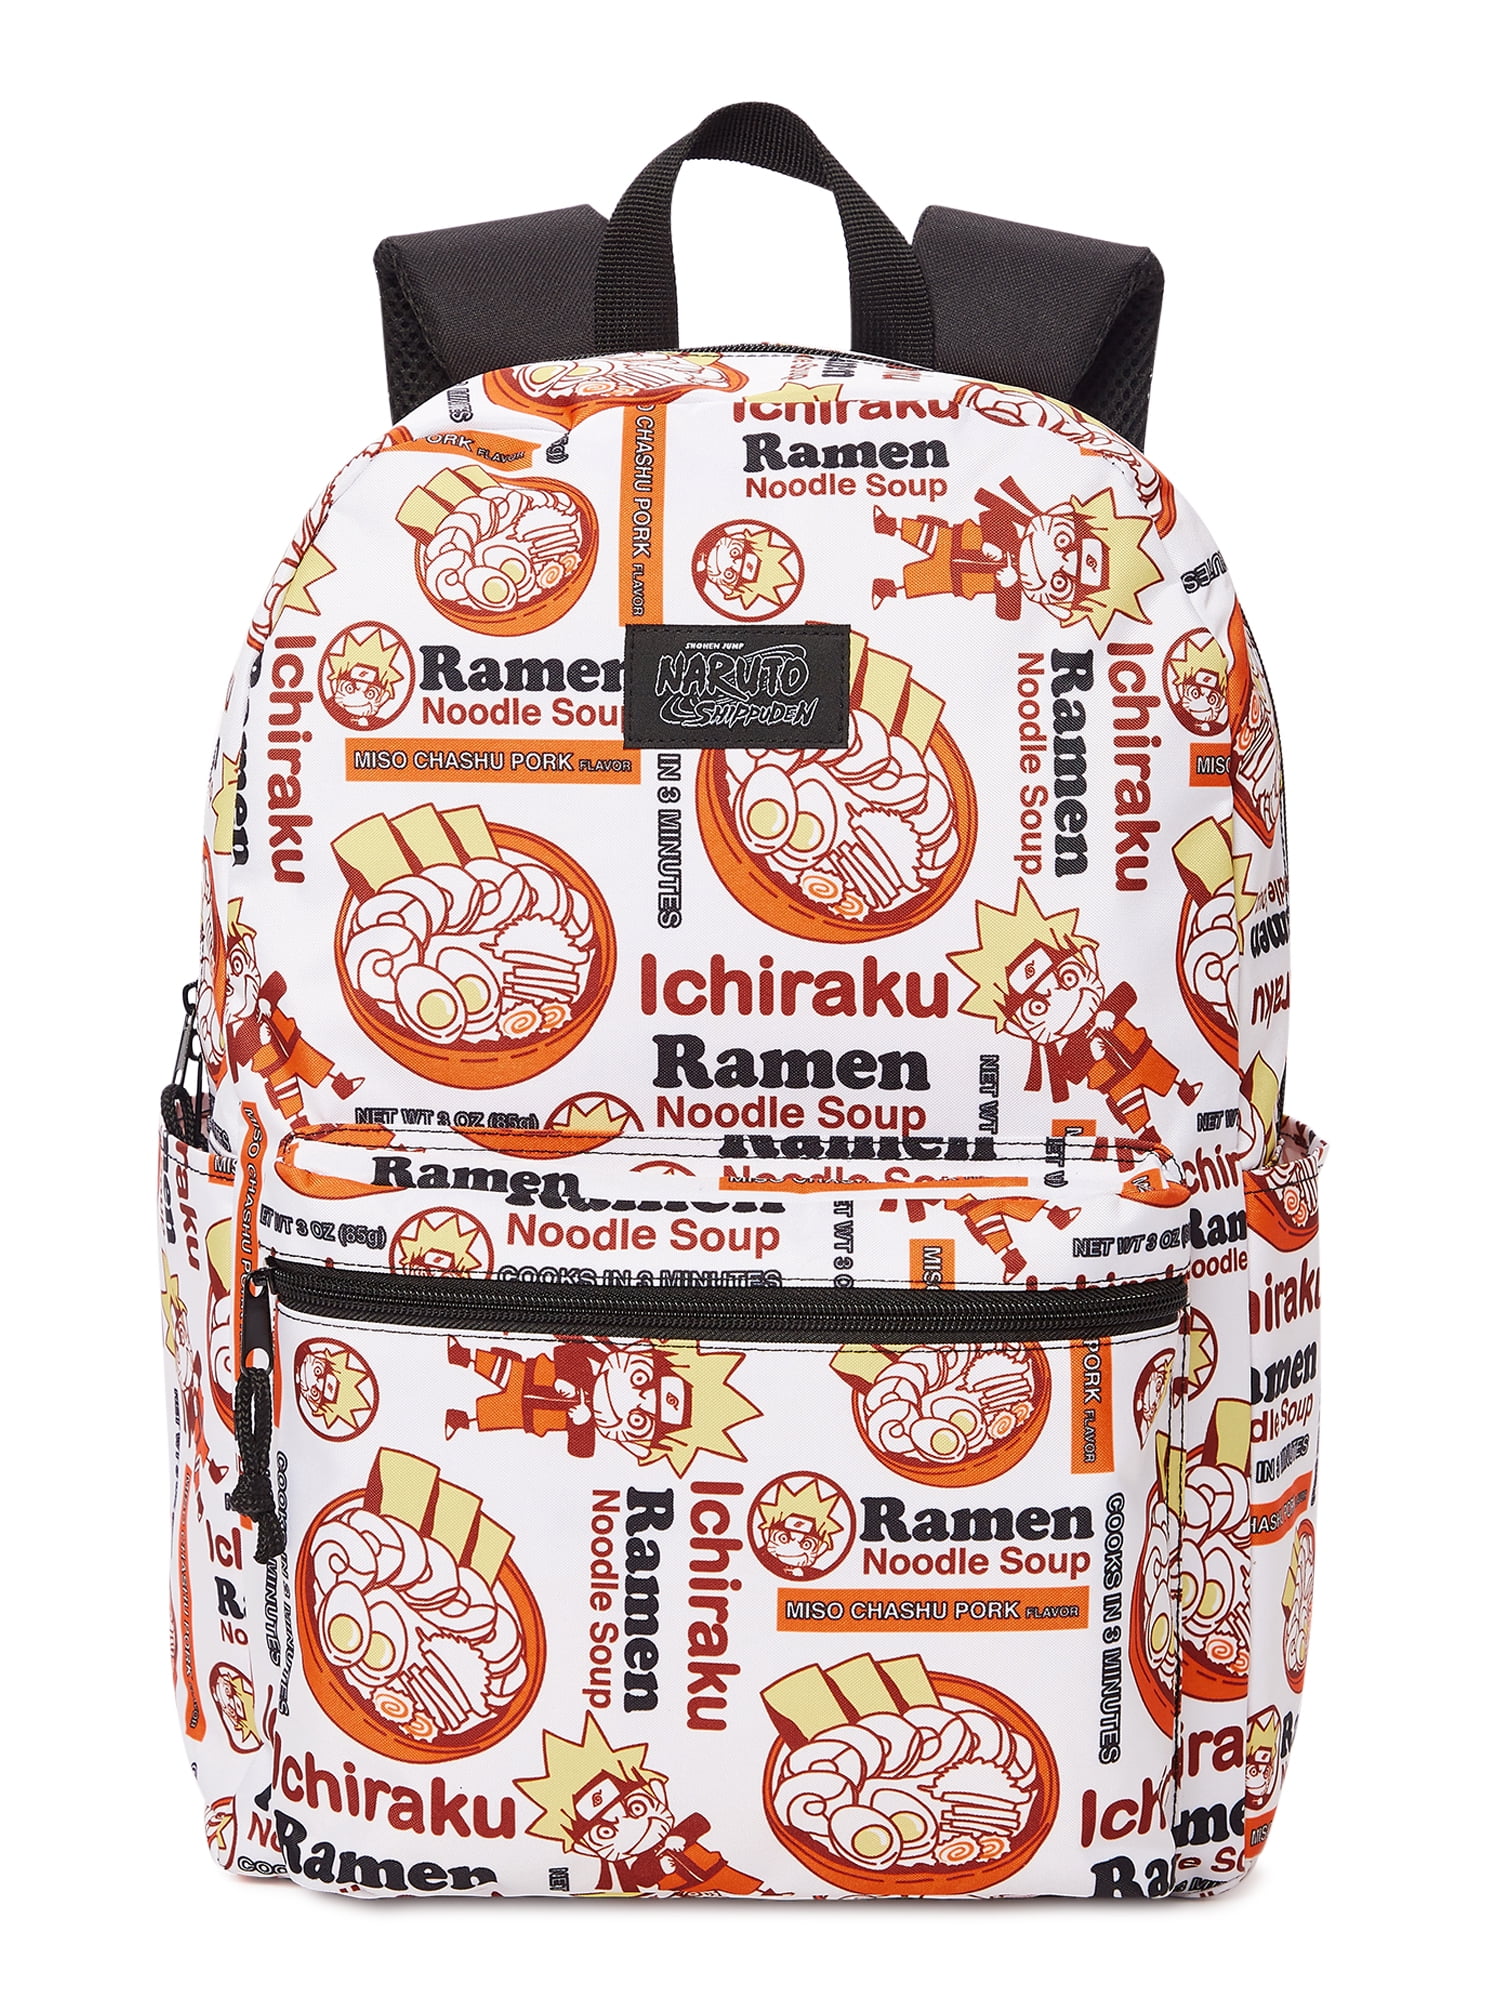 Naruto Shippuden Ramen Noodle Soup Backpack Ichiraku White Orange Laptop Sleeve 